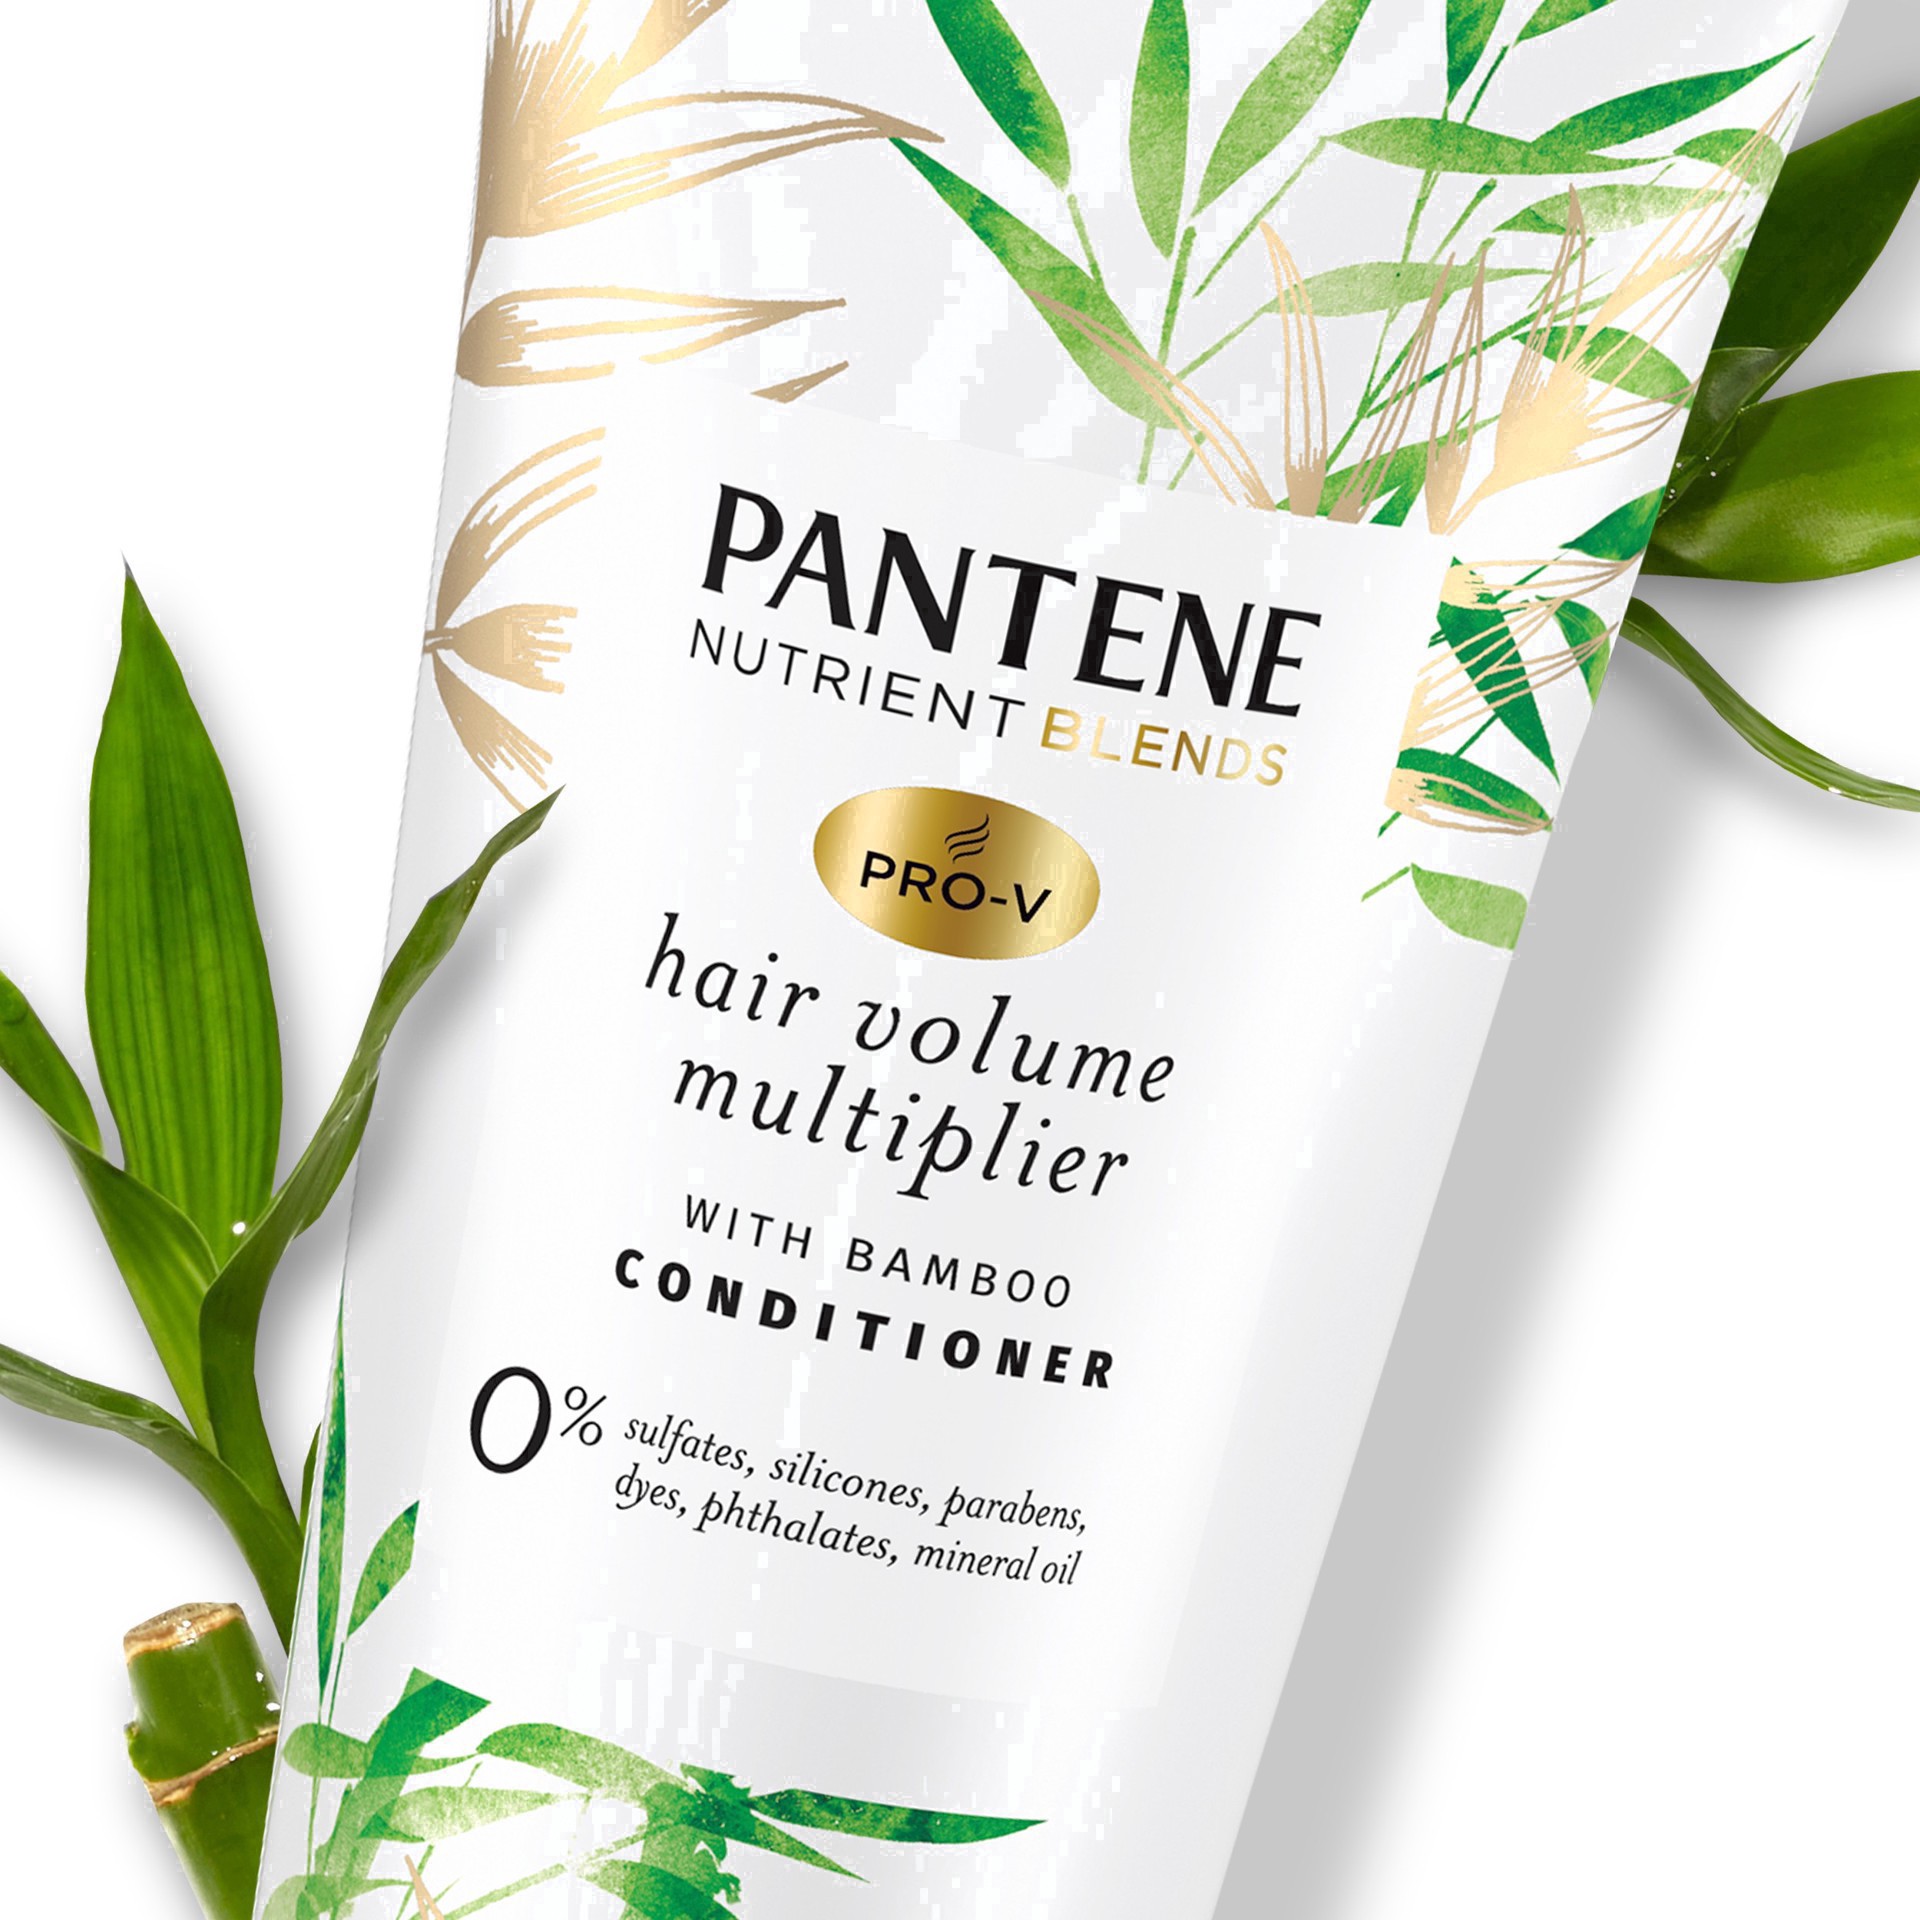 slide 29 of 85, Pantene Nutrient Blends Hair Volume Multiplier Silicone Free Bamboo Conditioner for Fine, Thin Hair, 8.0 fl oz, 8 fl oz